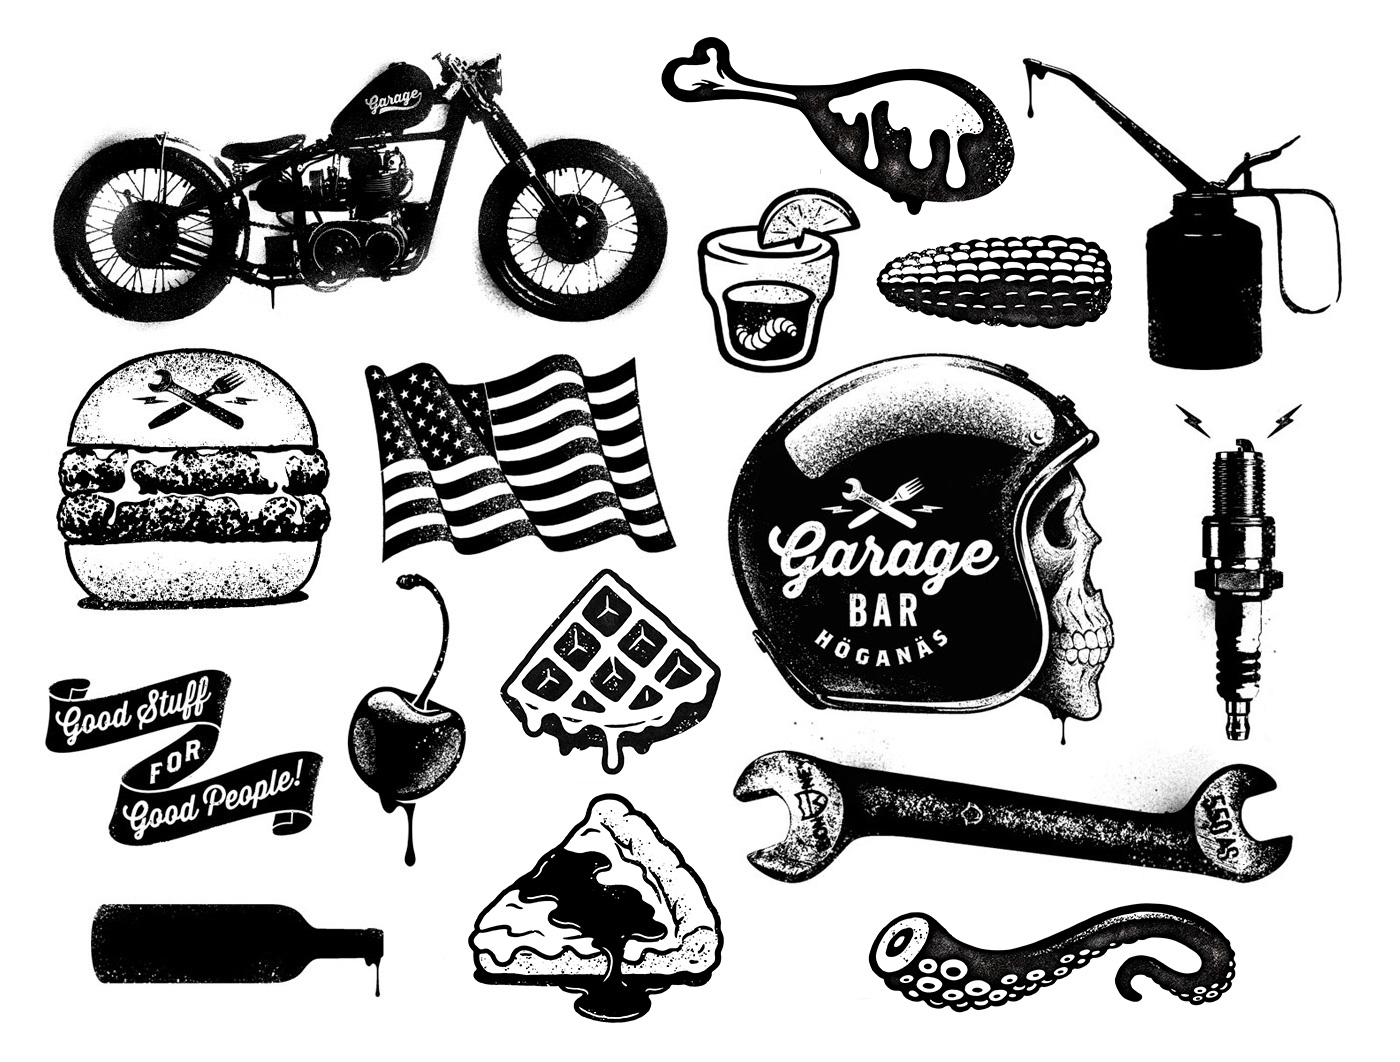 Garage bar - brand design illustrations